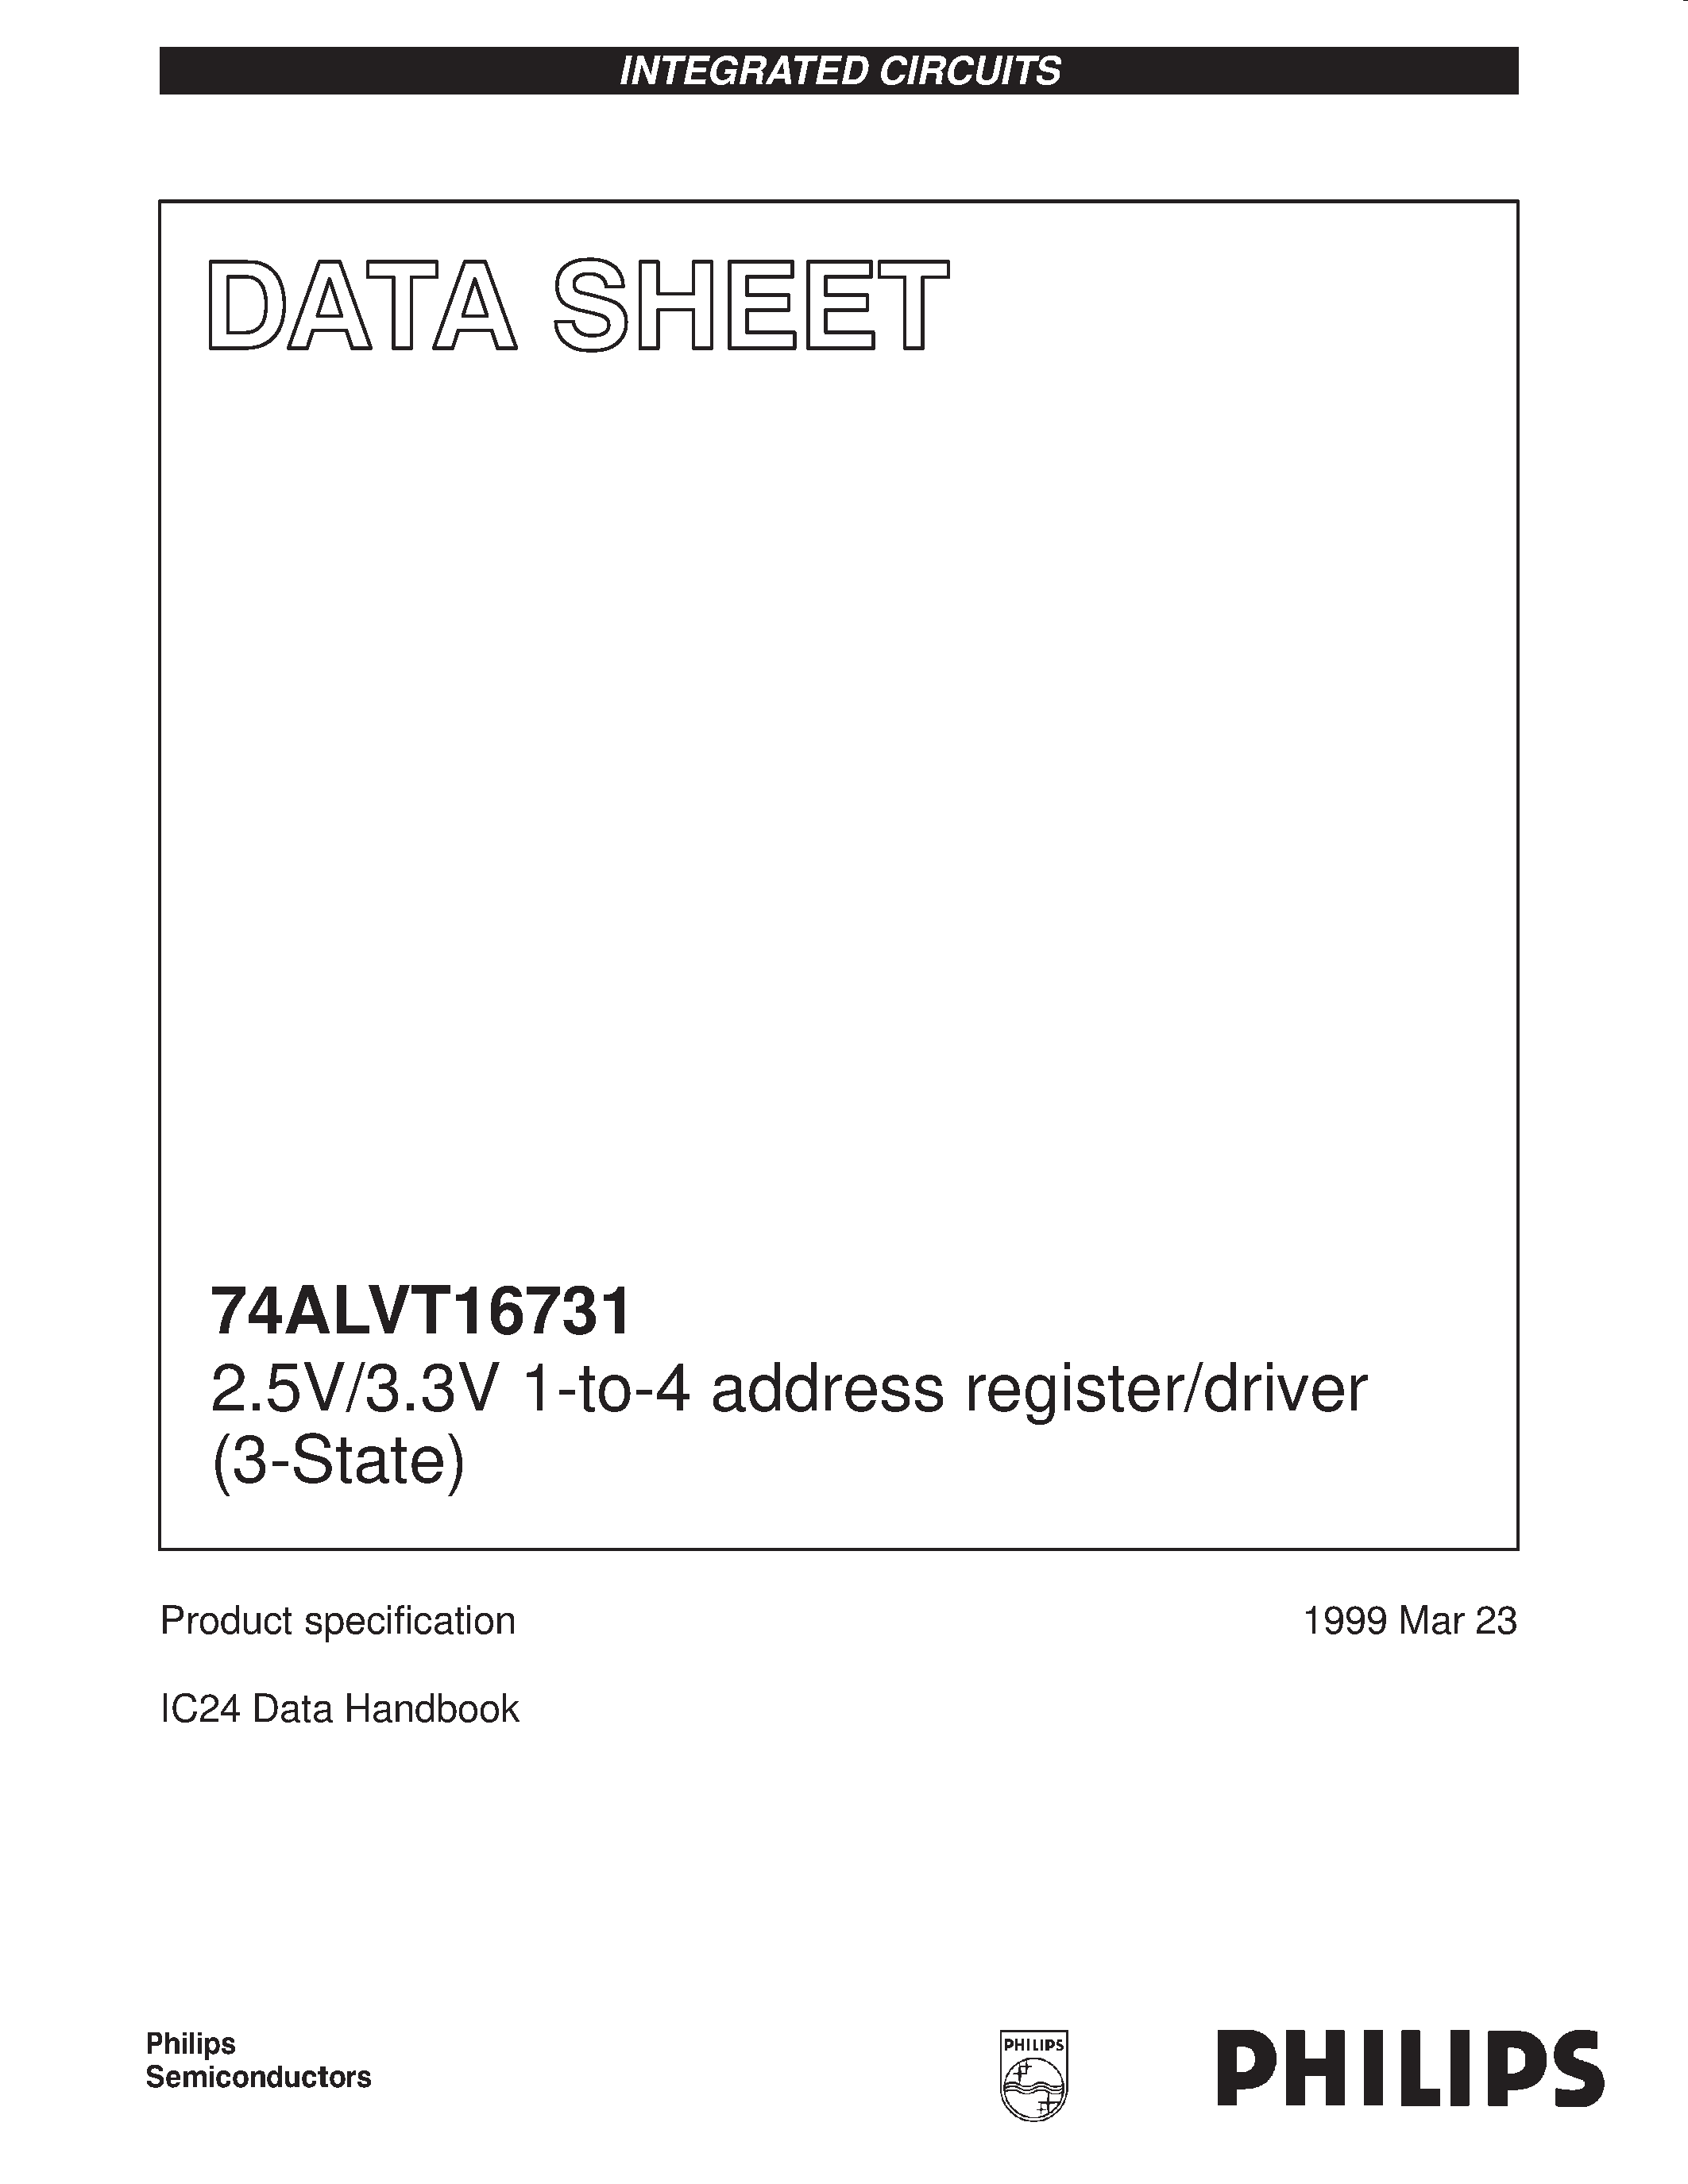 Datasheet 74ALVT16731DGG - 2.5V/3.3V 1-to-4 address register/driver 3-State page 1